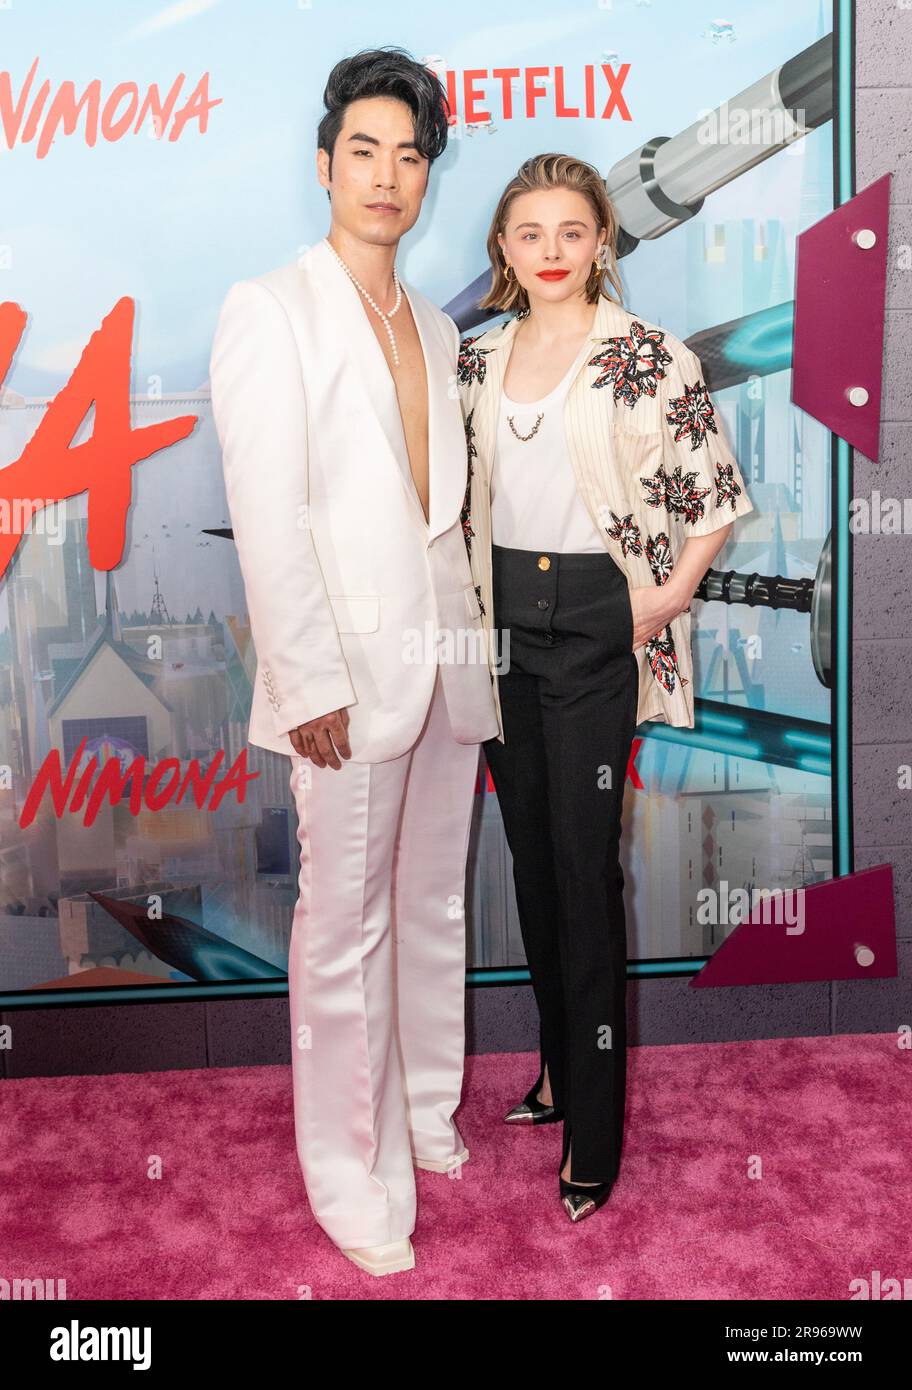 Chloe Grace Moretz Wore Louis Vuitton To The NIMONA New York Screening